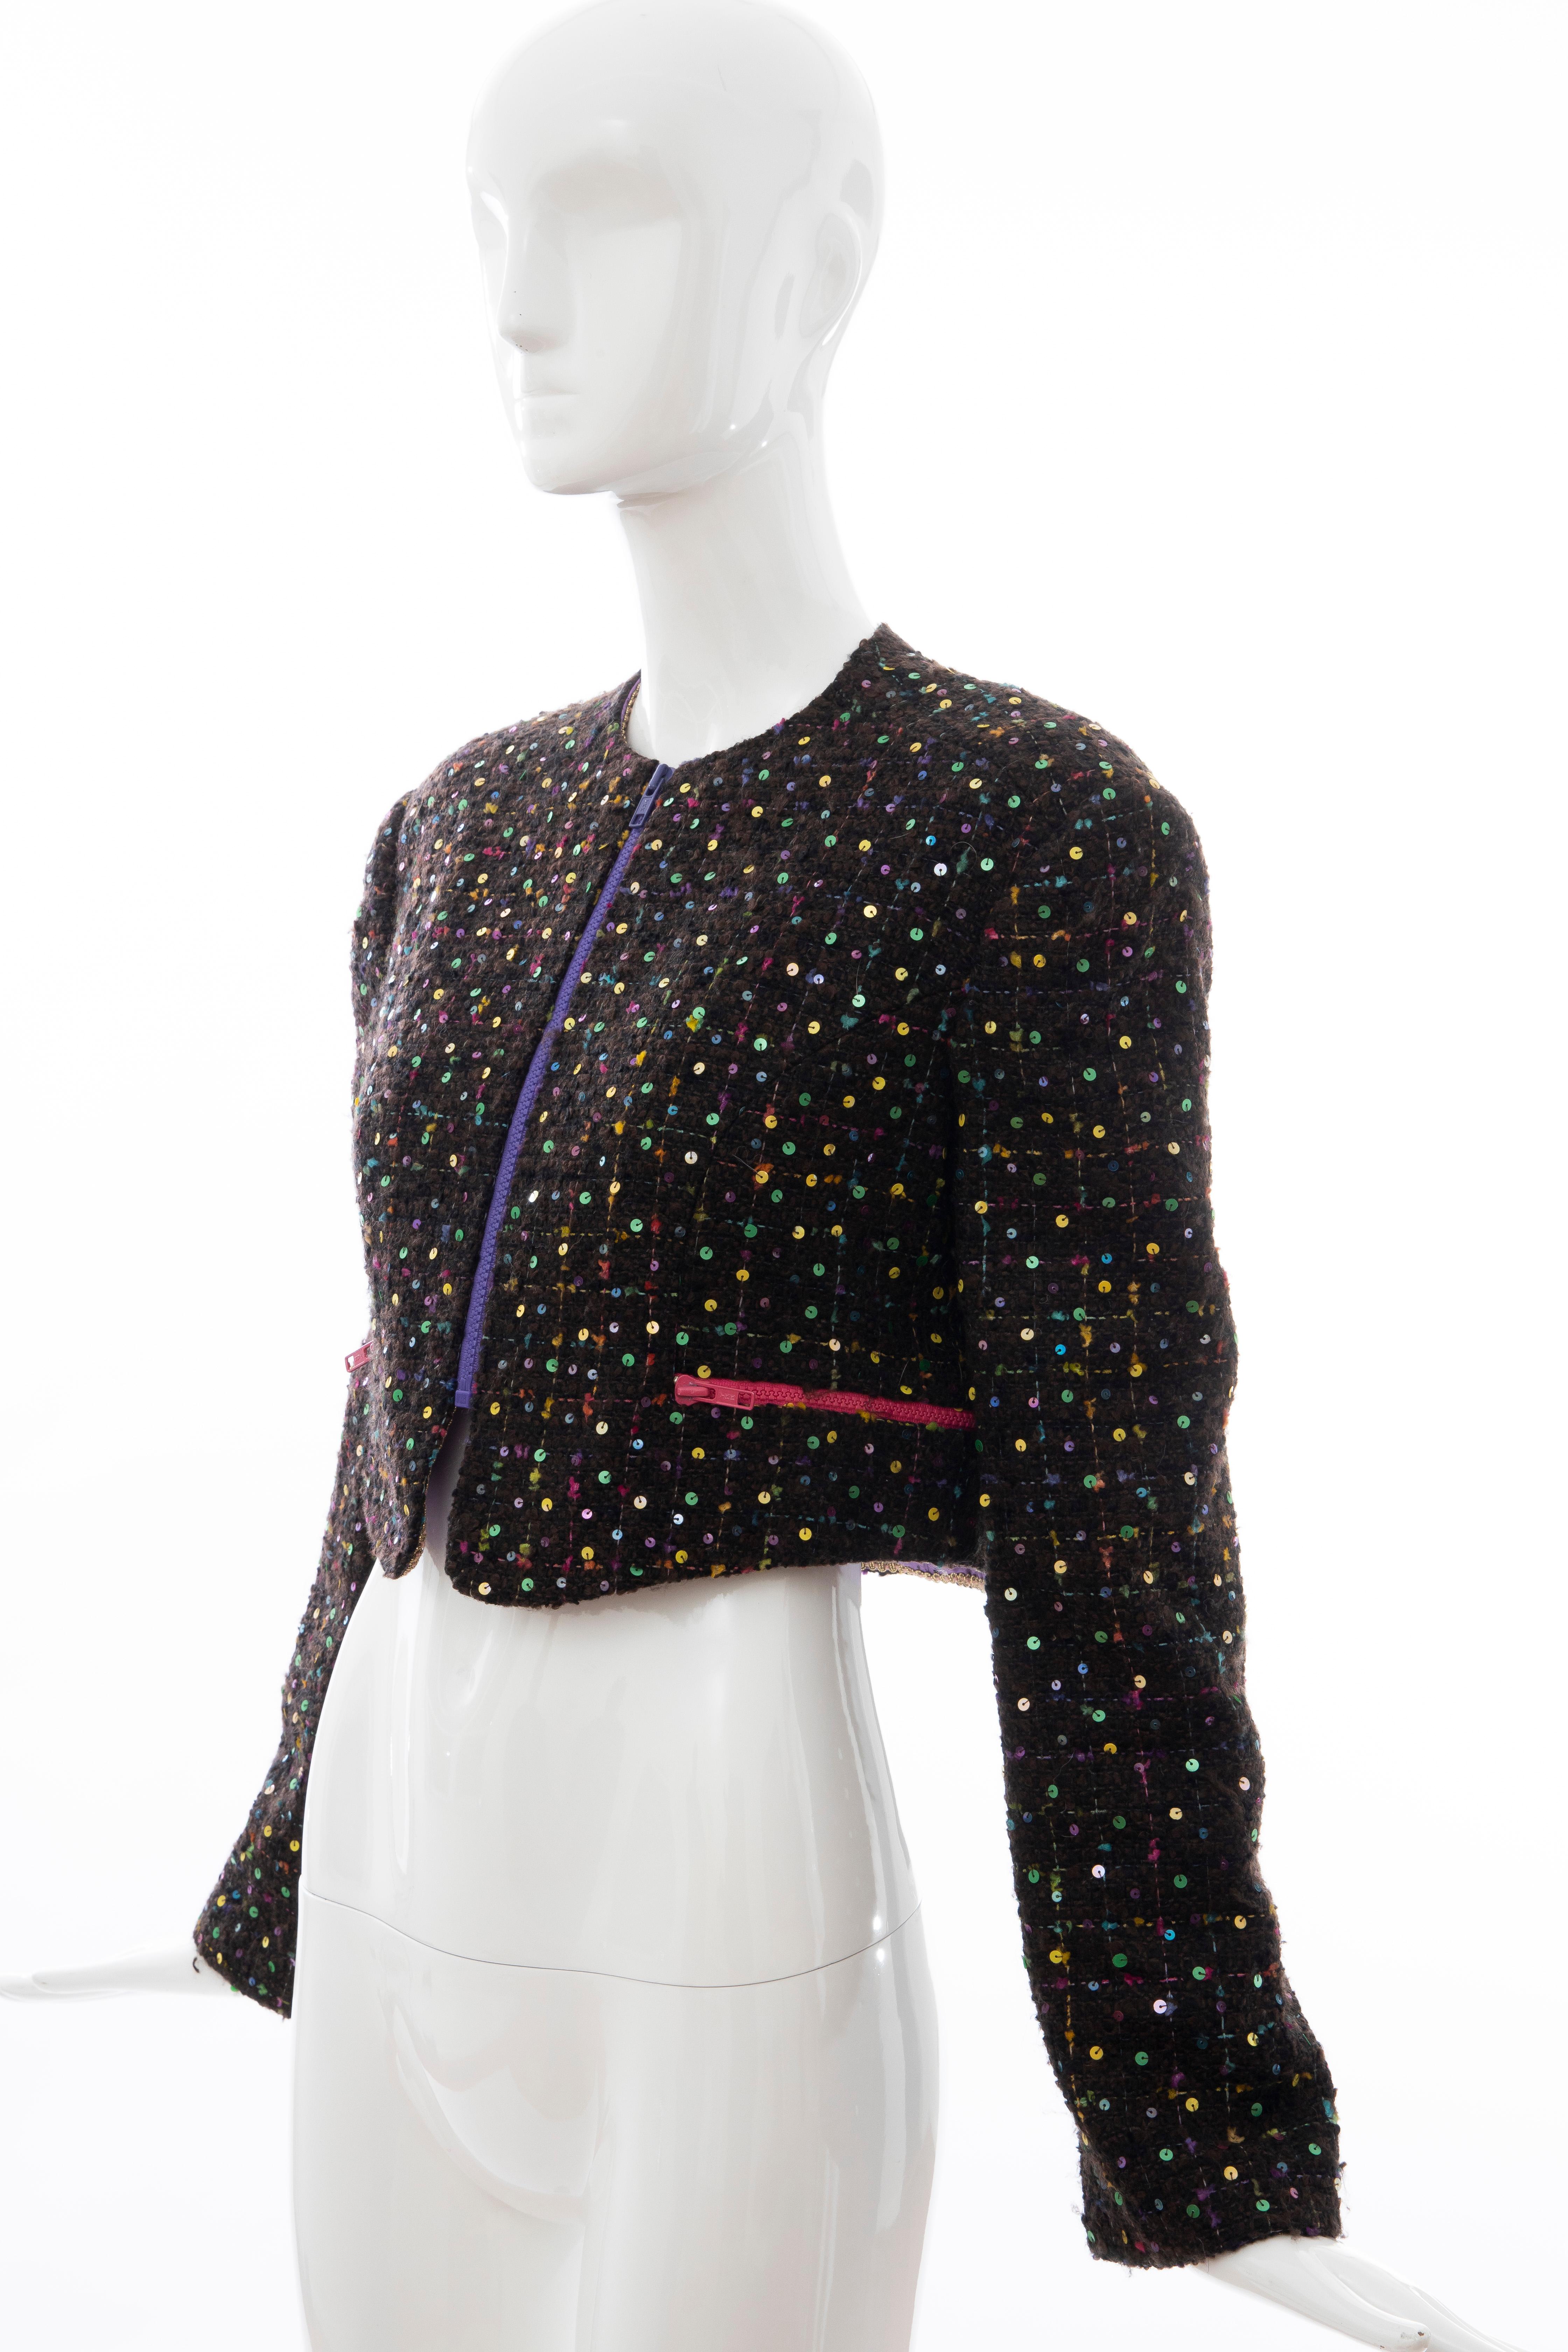 Geoffrey Beene Tweed Polychrome Sequined Bolero Jacket, Spring 1989 For Sale 8